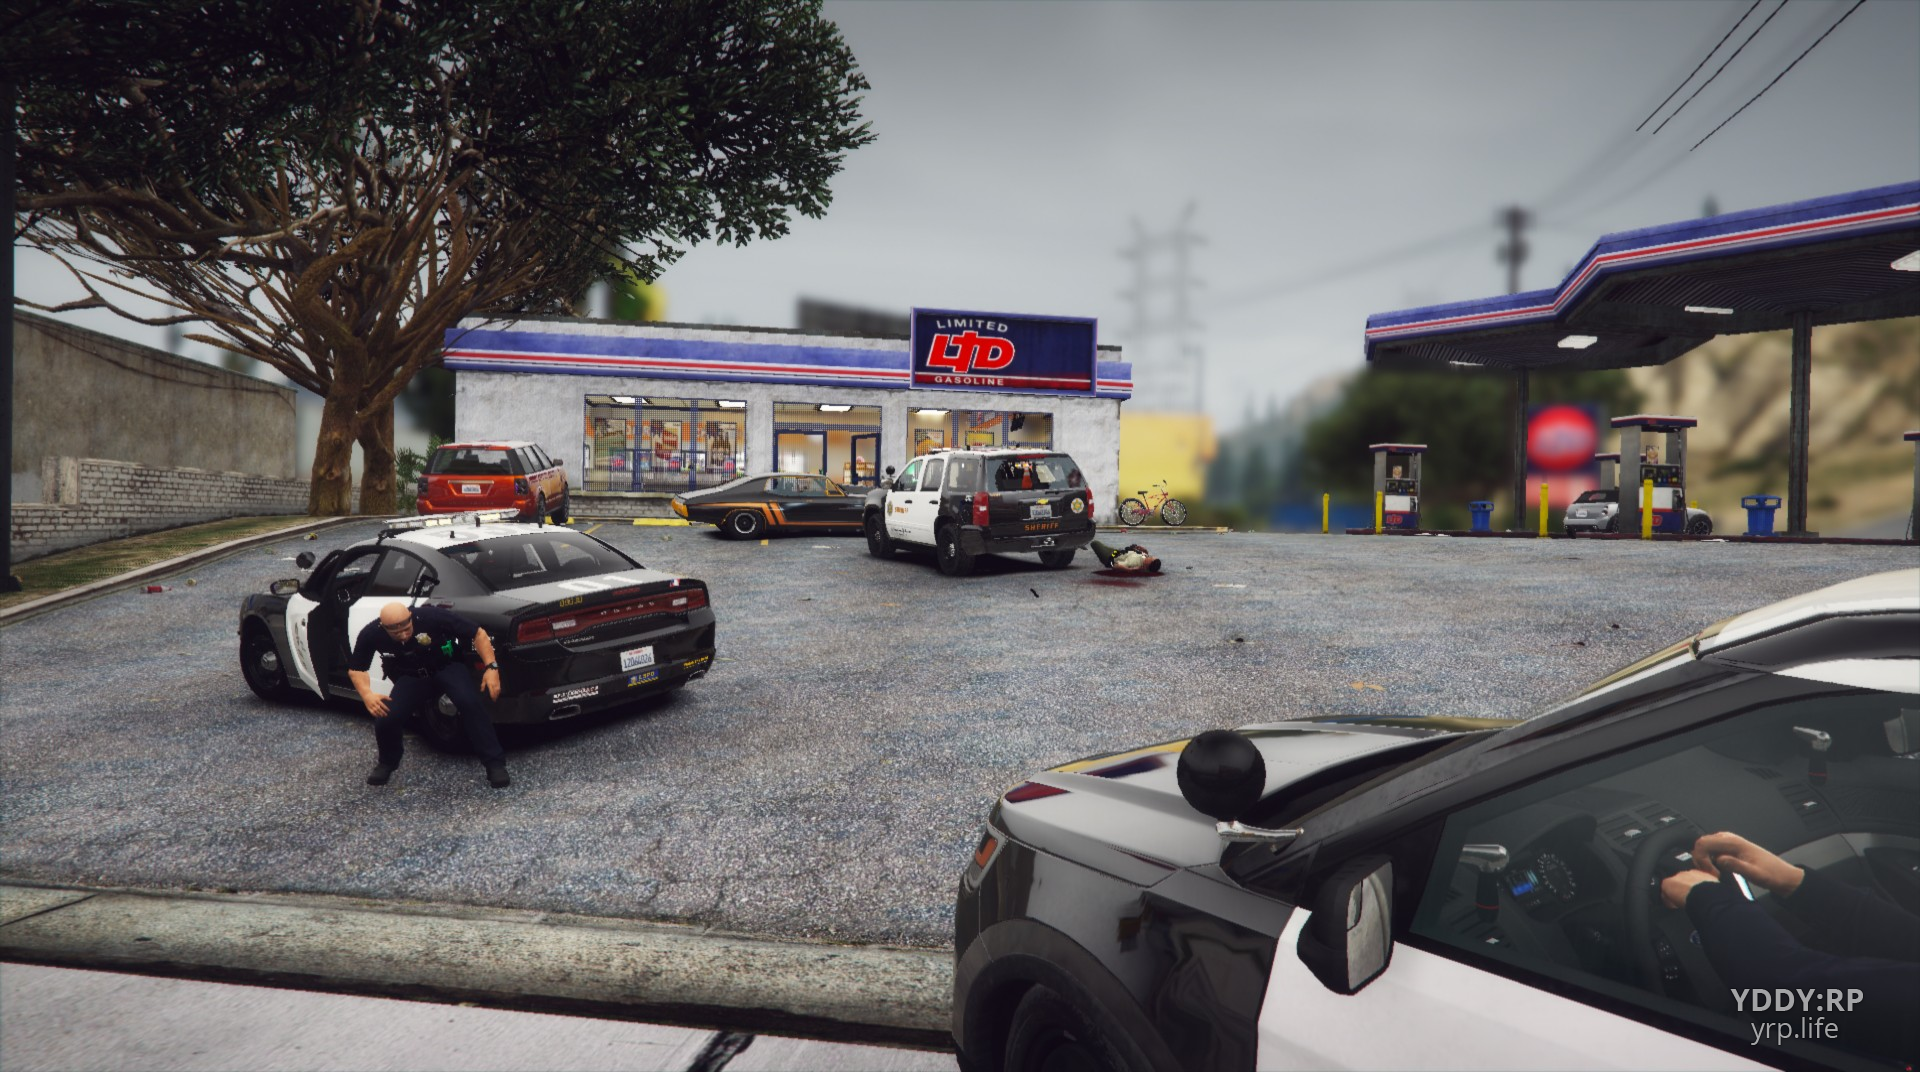 Gasoline station robbery